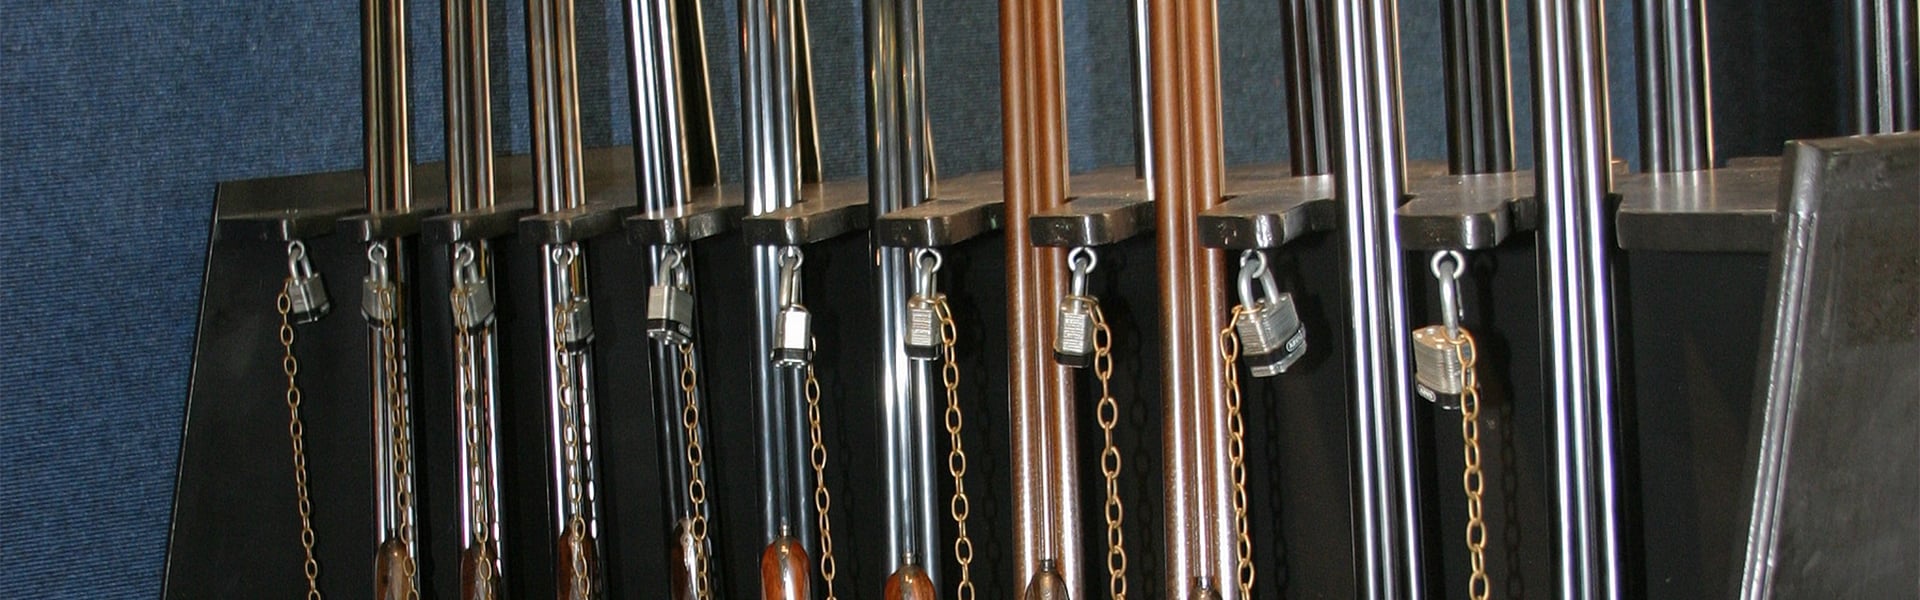 A rack of secure shotguns